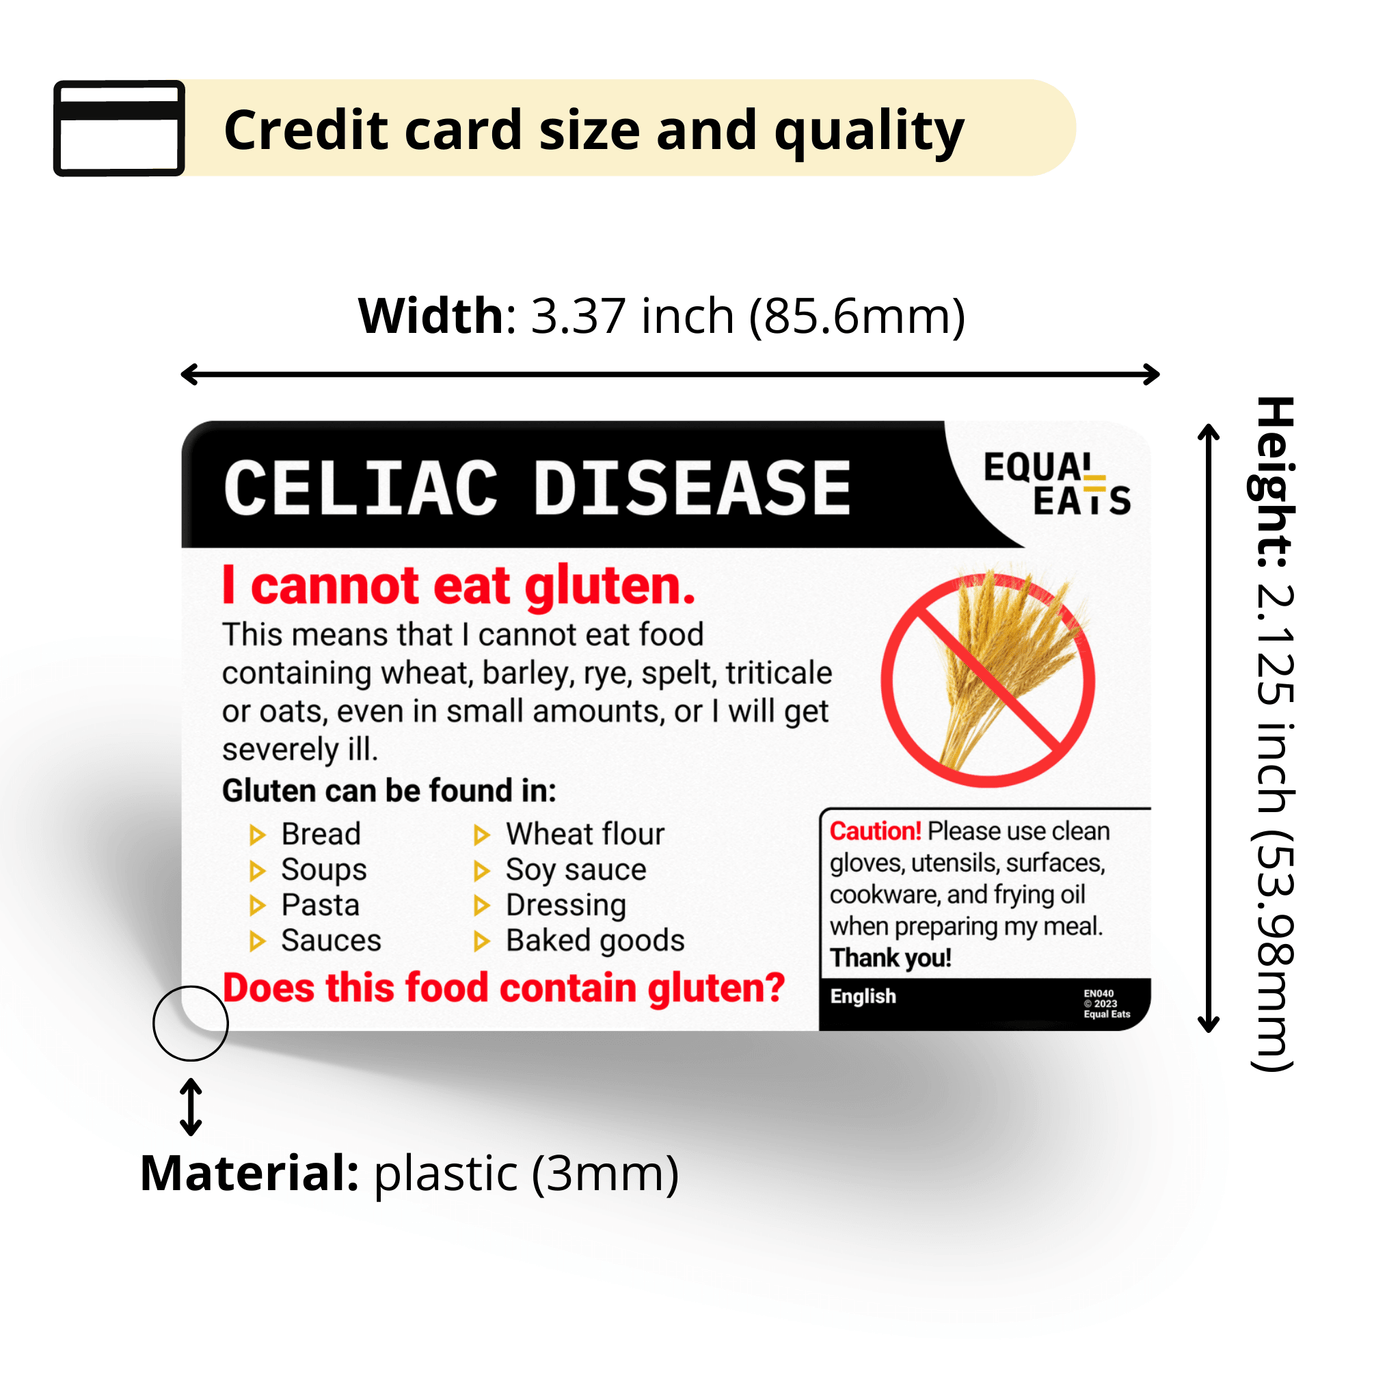 Croatian Celiac Disease Card